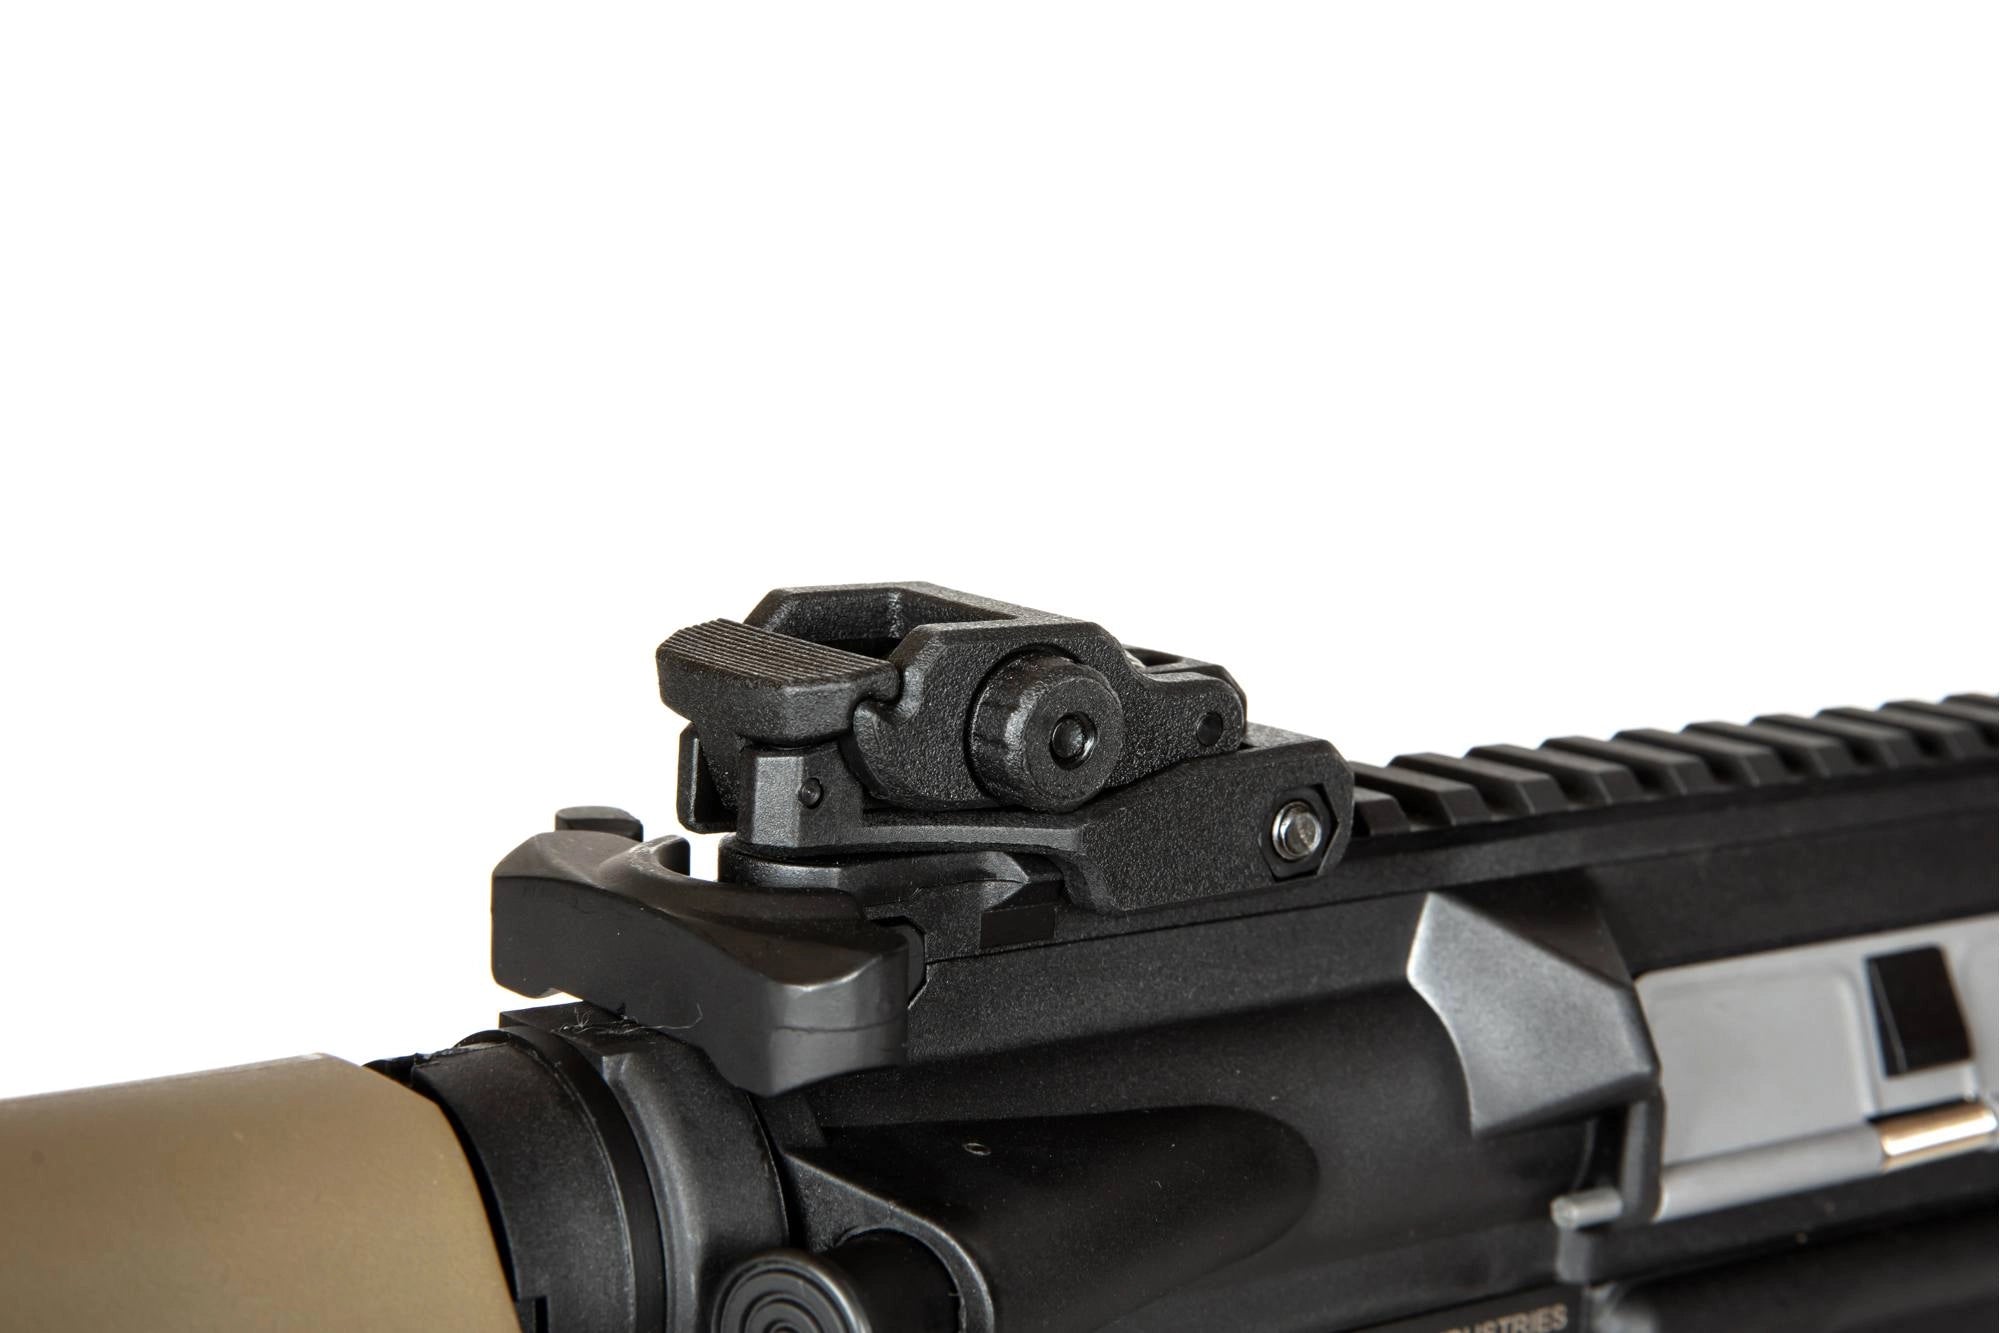 Specna Arms SA-F01 FLEX GATE X-ASR - Black/Tan - Eminent Paintball And Airsoft